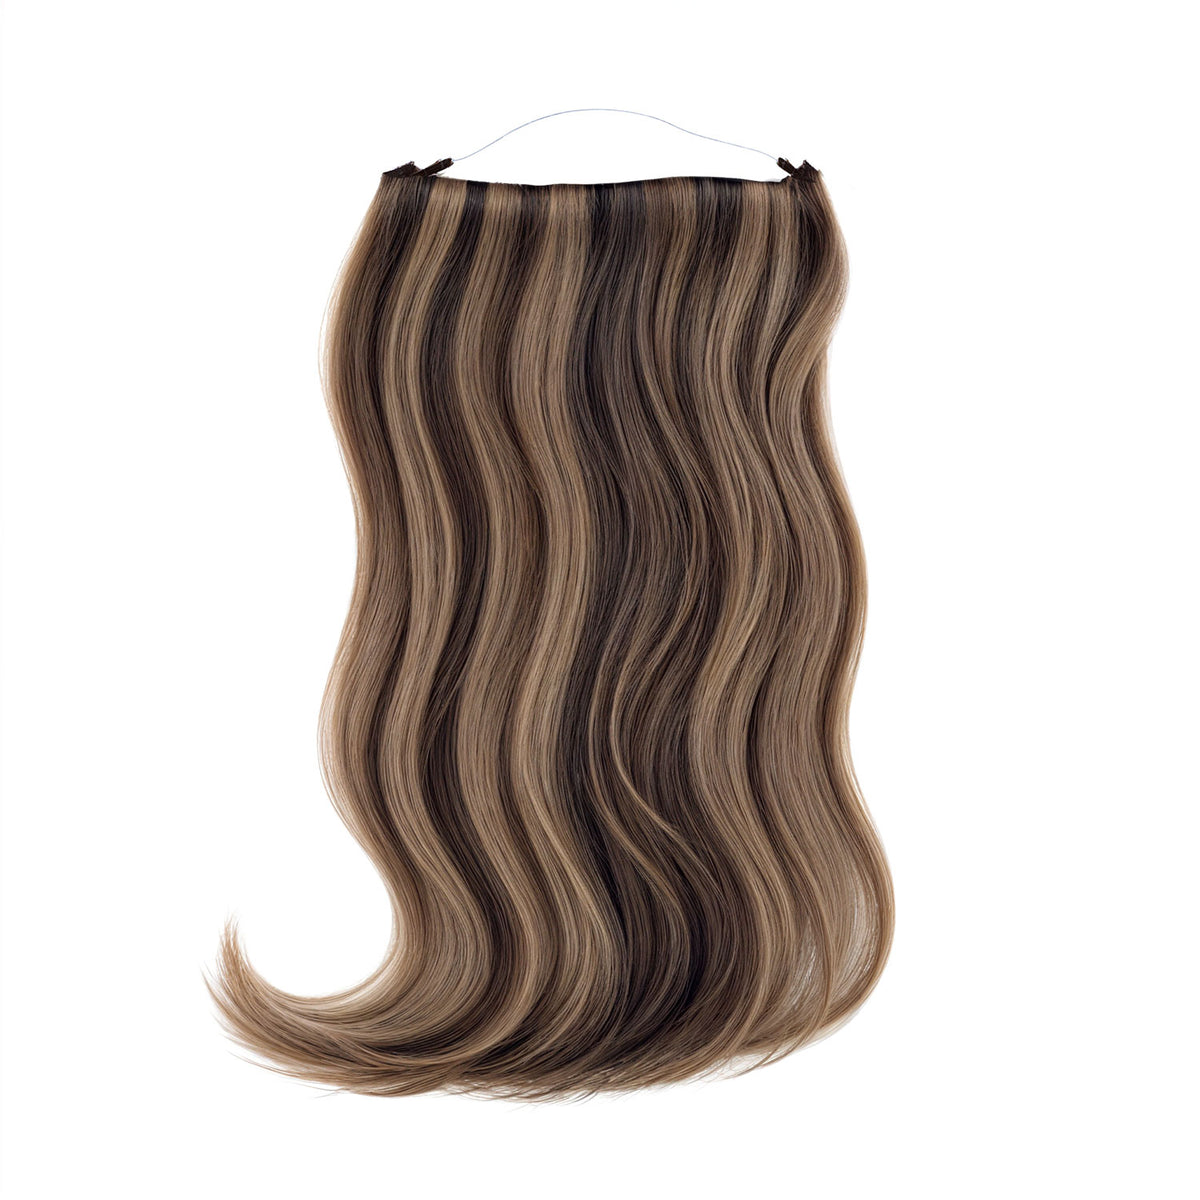 Halo Hair Extensions Dark Brown & Natural Blonde Balayage